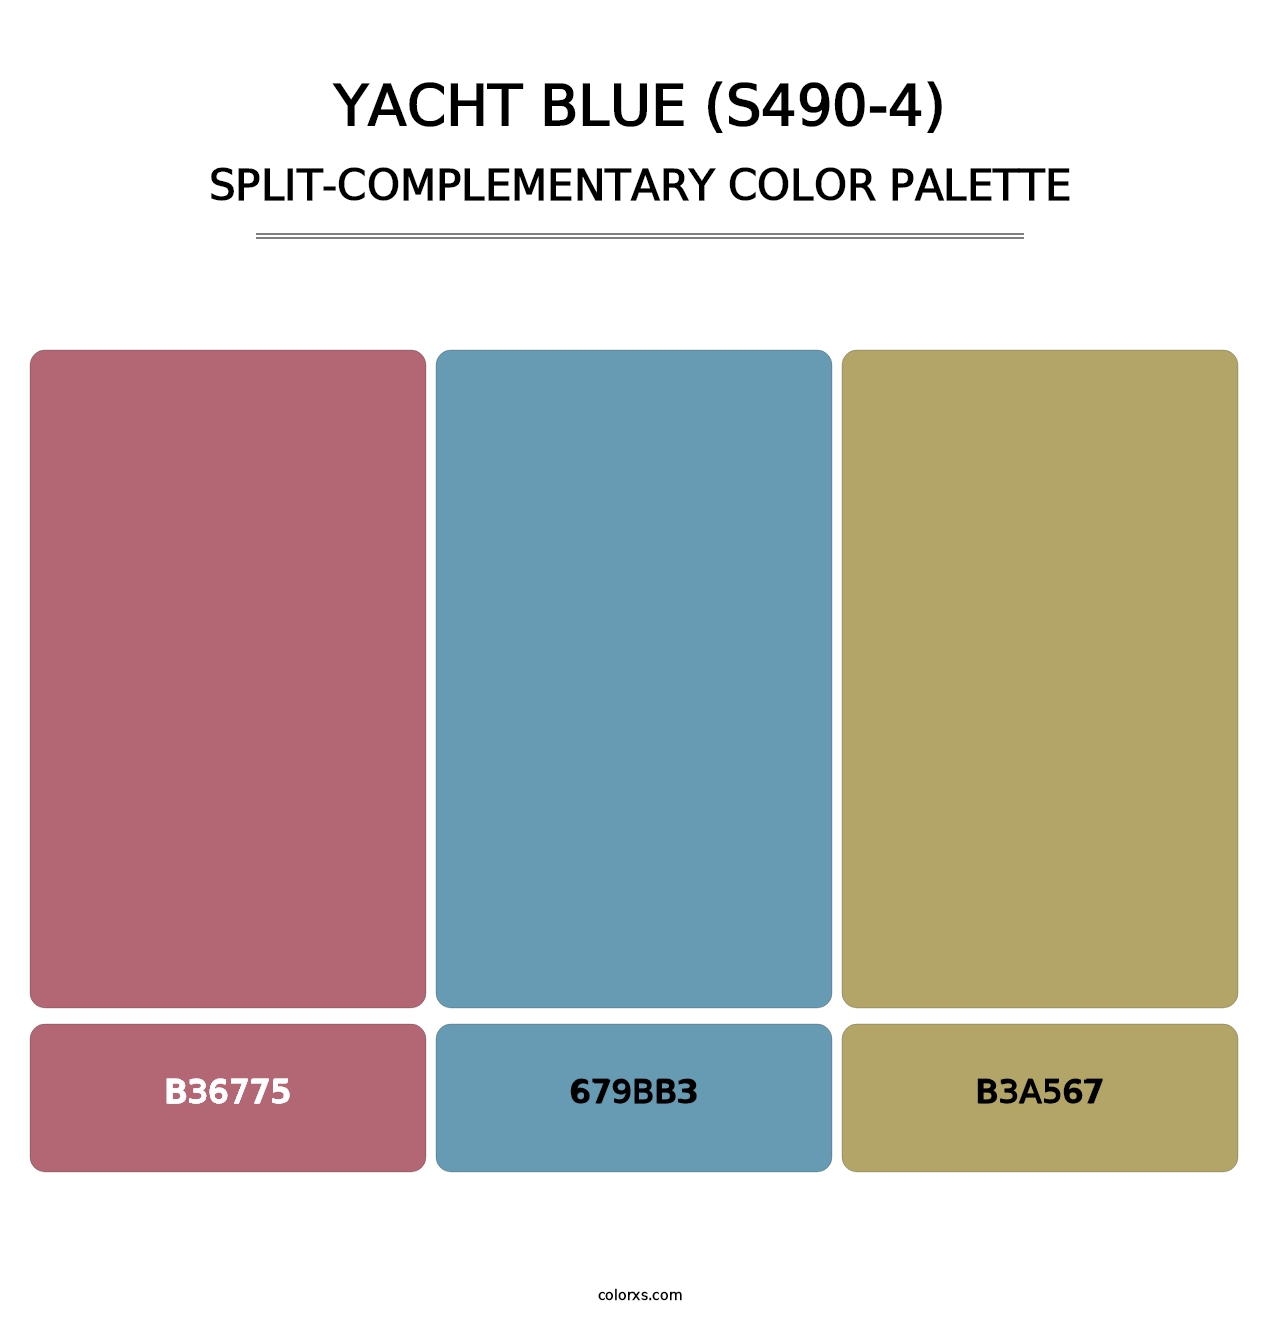 Yacht Blue (S490-4) - Split-Complementary Color Palette